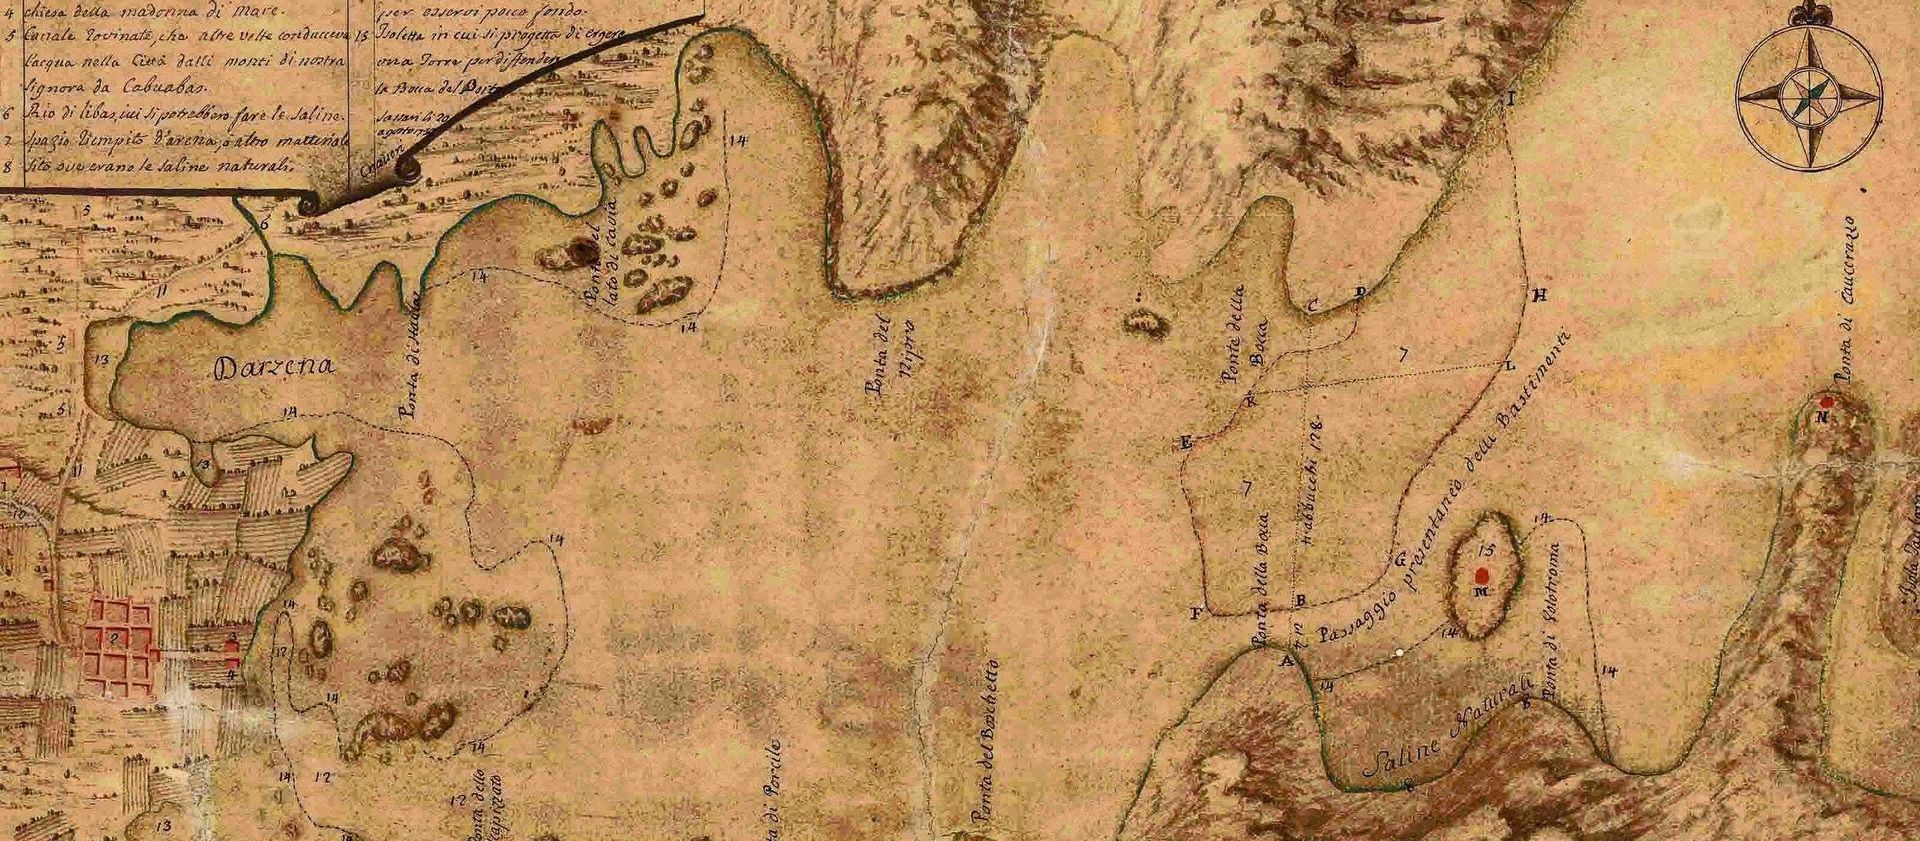 Craveri, Gulf of Terranova, 1739